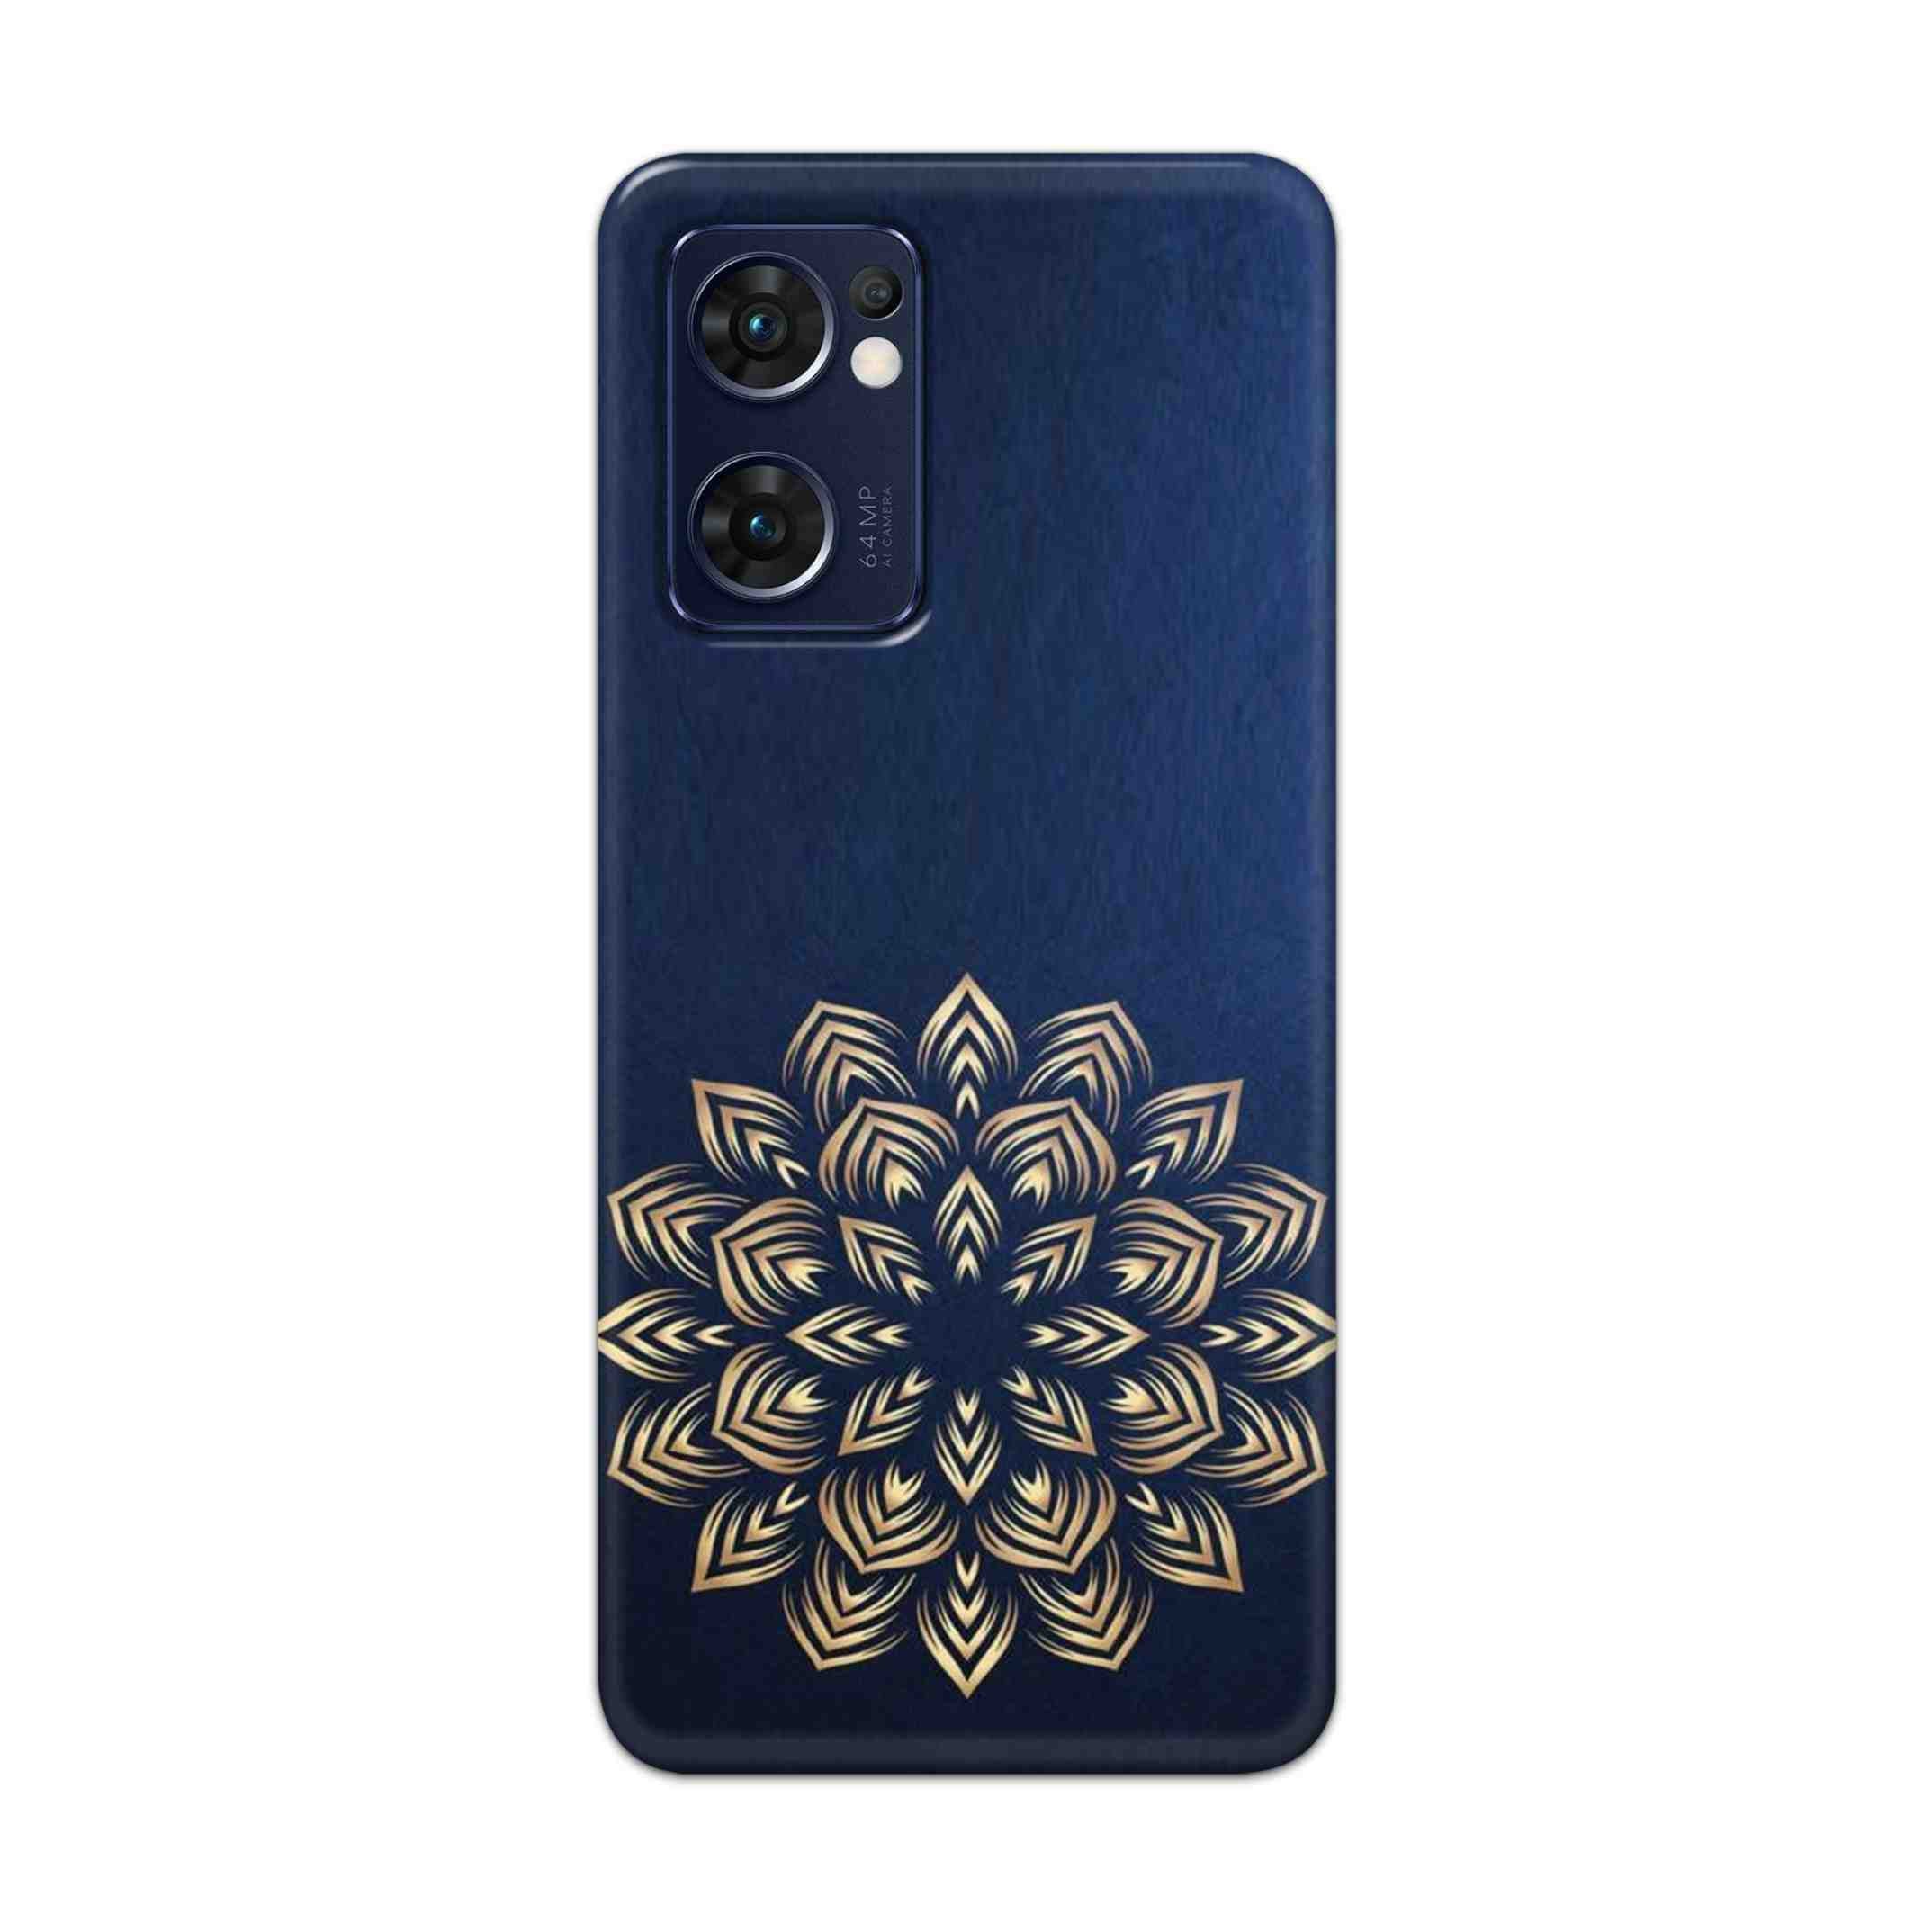 Buy Heart Mandala Hard Back Mobile Phone Case Cover For Reno 7 5G Online